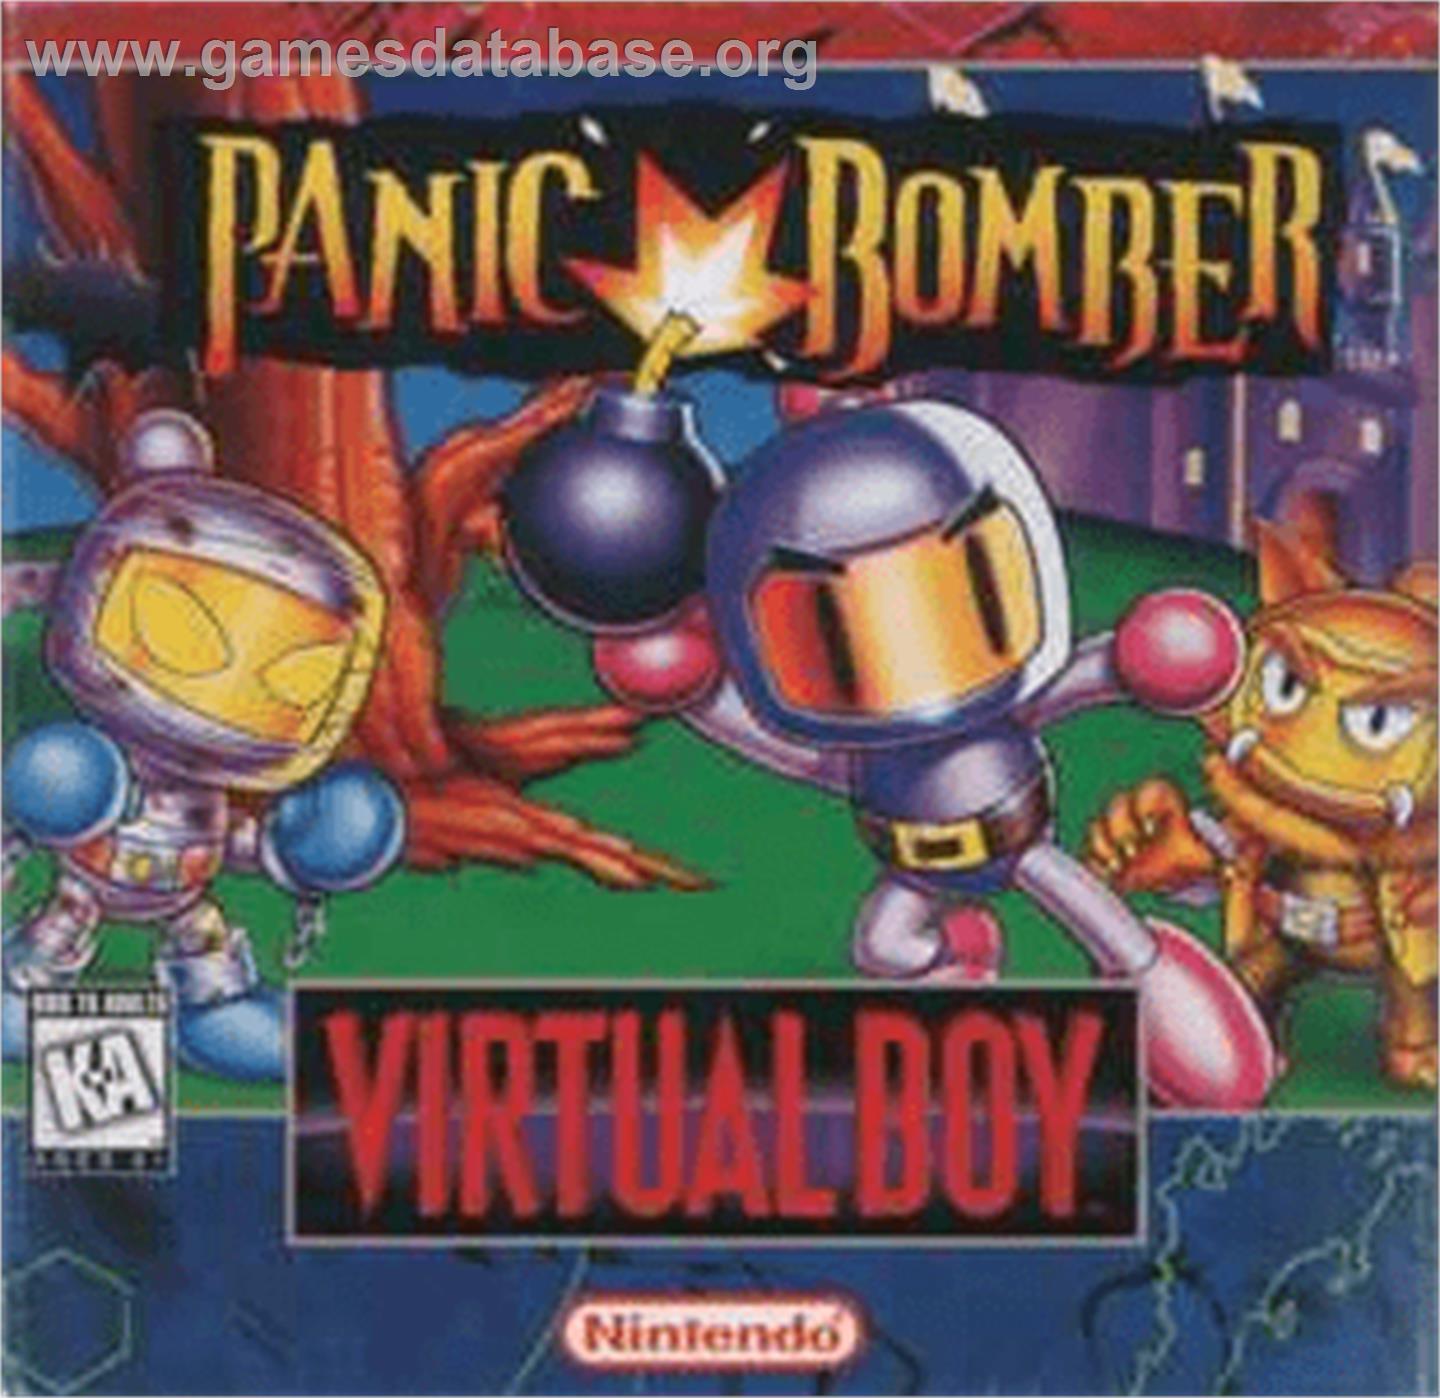 Panic Bomber - Nintendo Virtual Boy - Artwork - Box